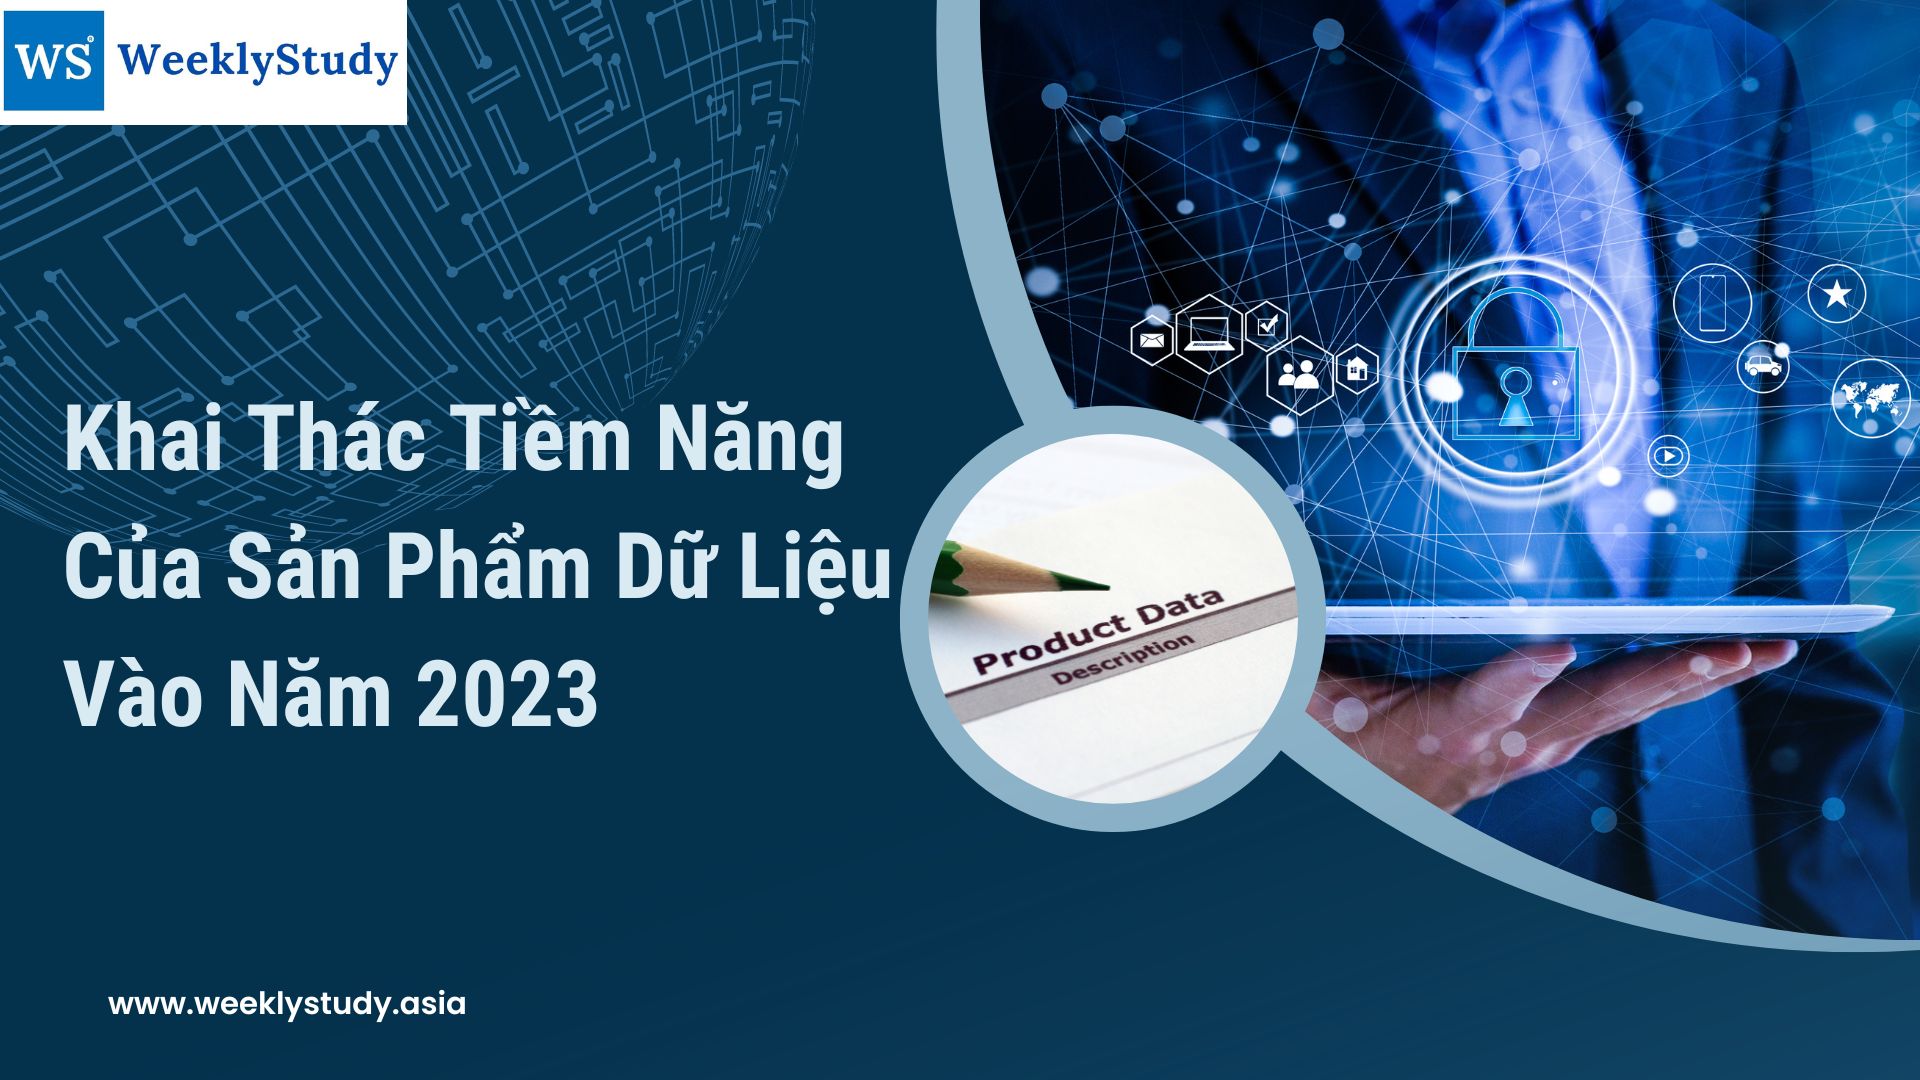 khai-thac-tiem-nang-cua-san-pham-du-lieu-vao-nam-2023